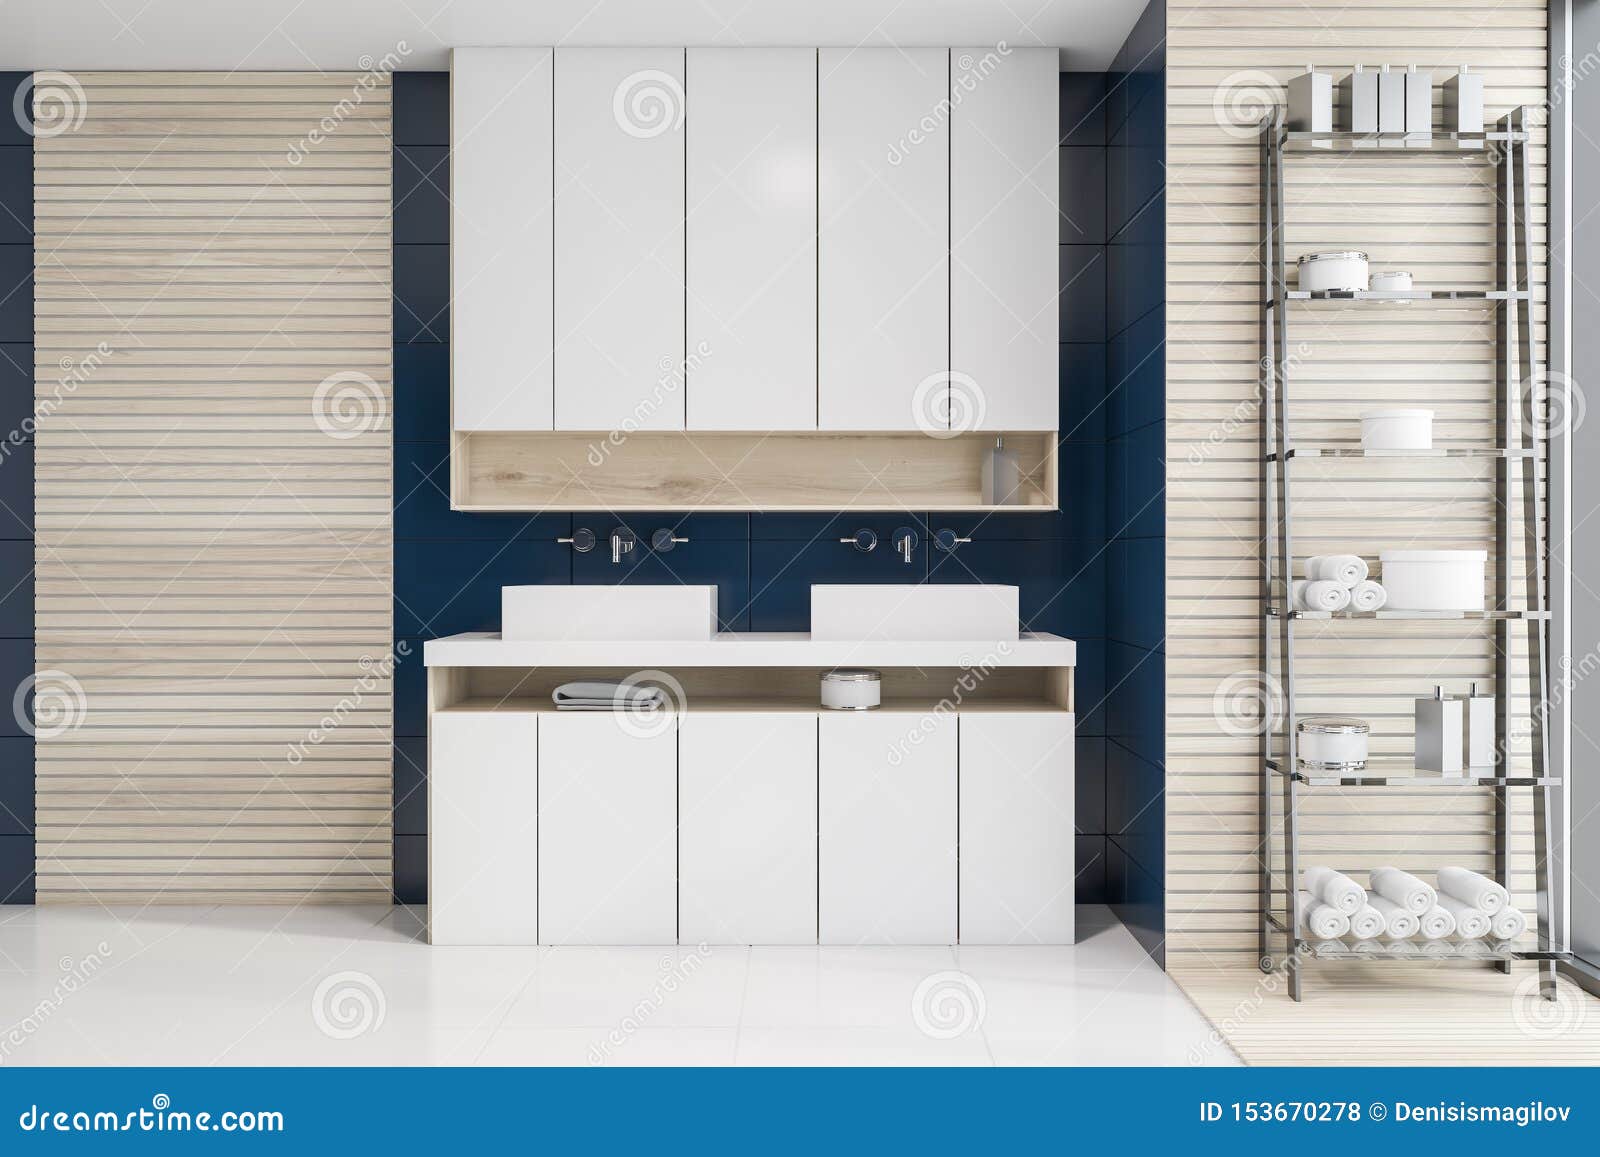 Blue Tile And Wood Bathroom Sinks And Rack Stock Illustration